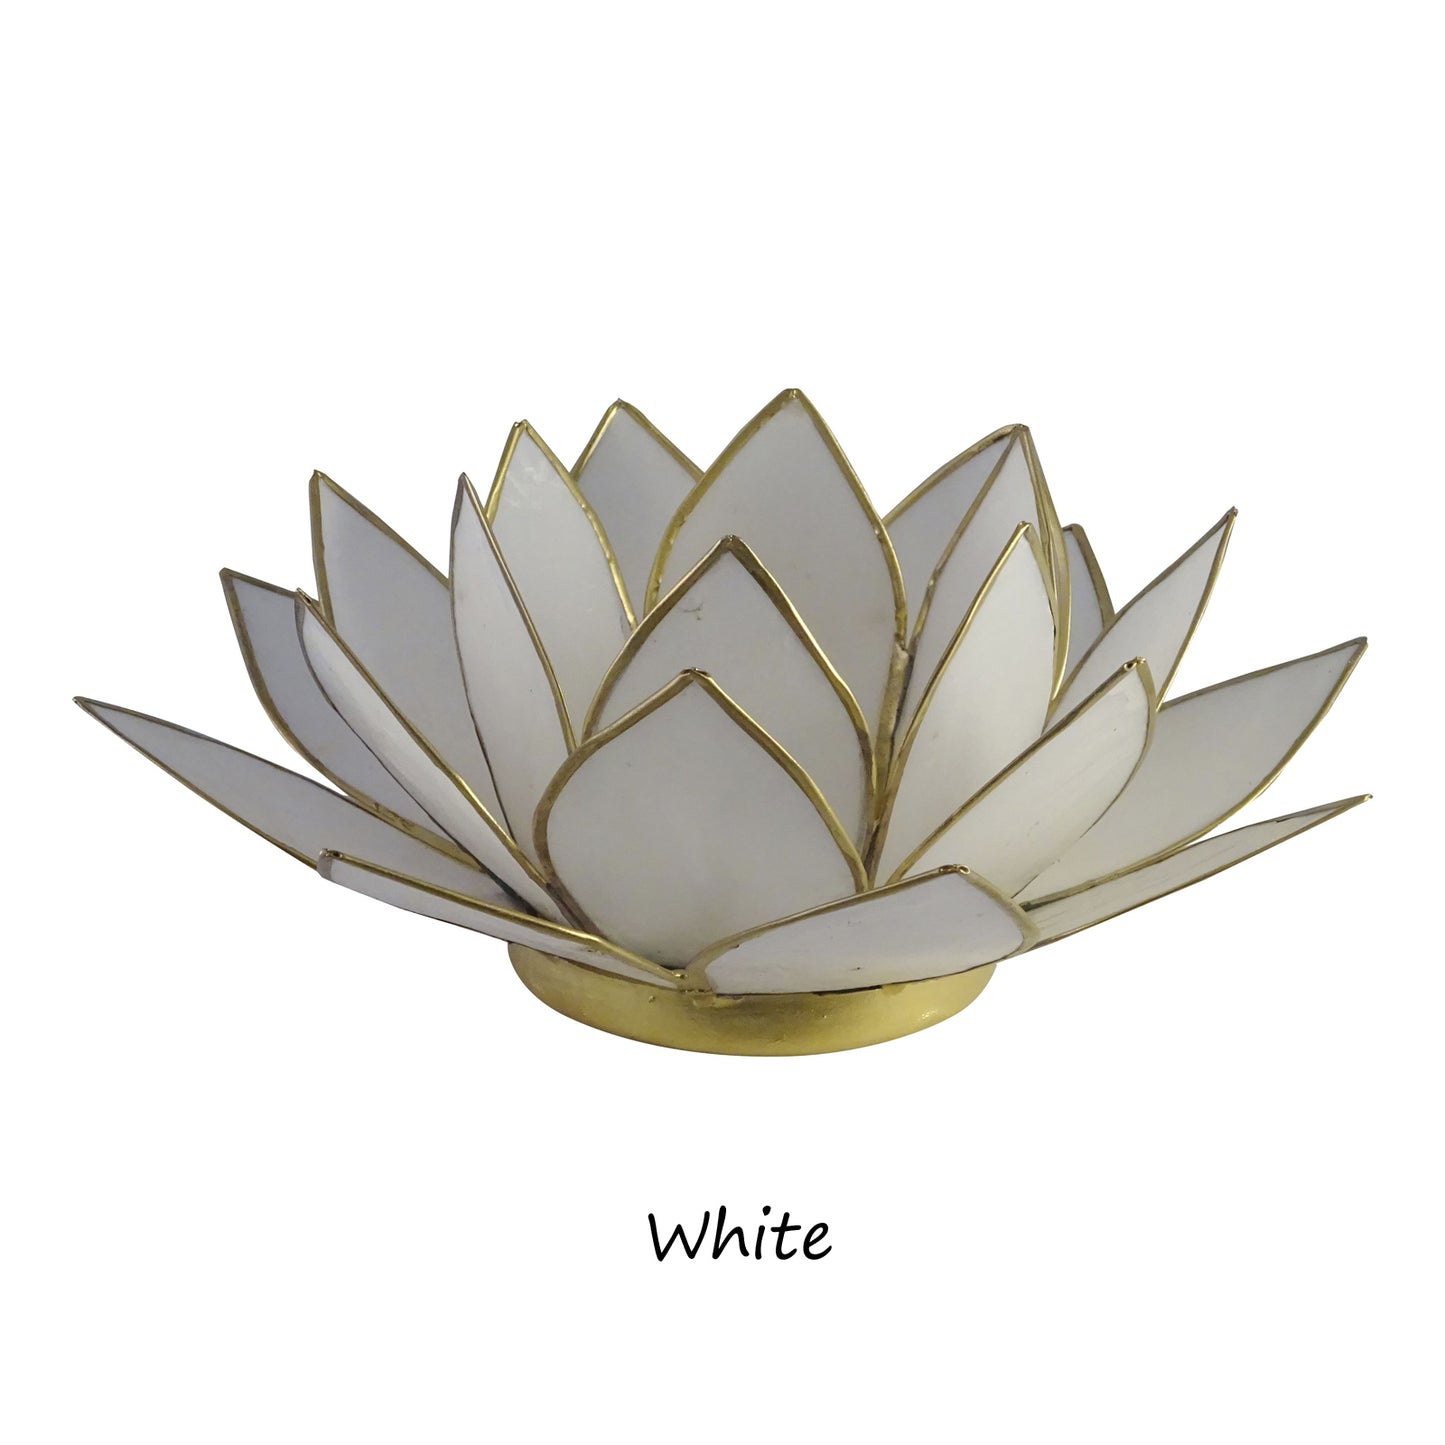 Fire Sale! Lotus Flower Tea Light Candle Holder Capiz Shell Decorating Accent Home Decor Candleholder